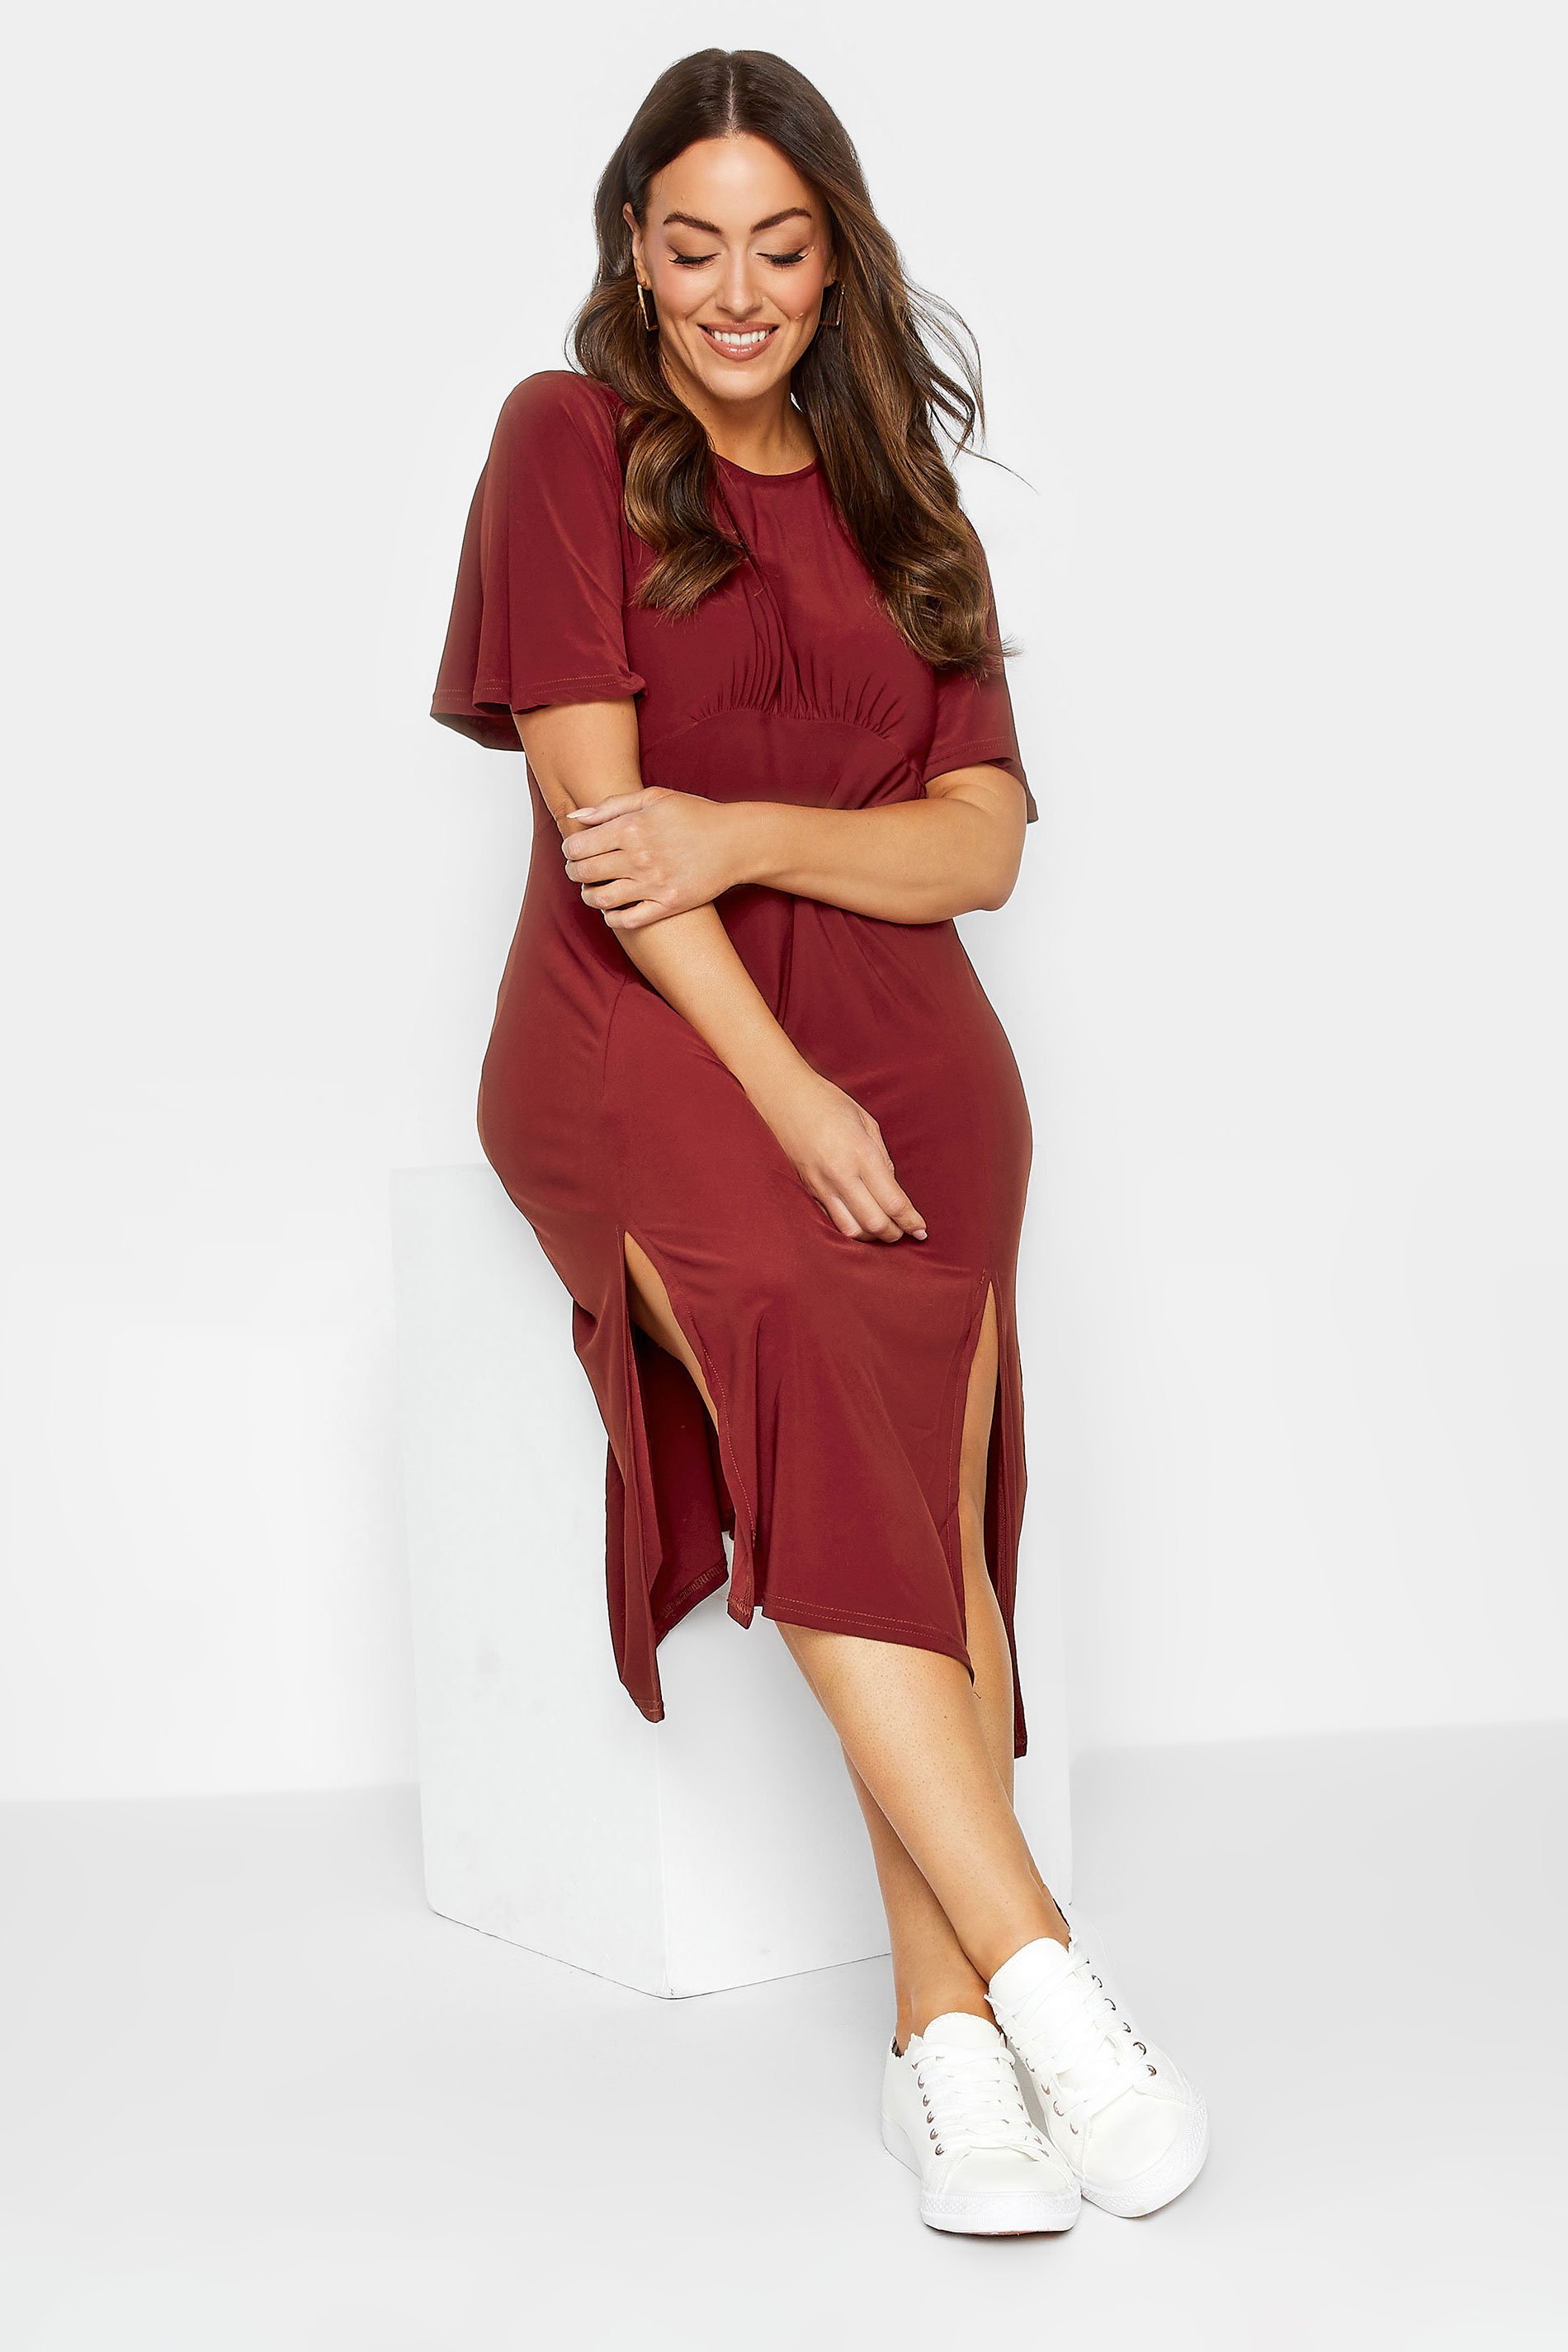 M&Co Burgundy Red Angel Sleeve Split Hem Midi Dress | M&Co 2